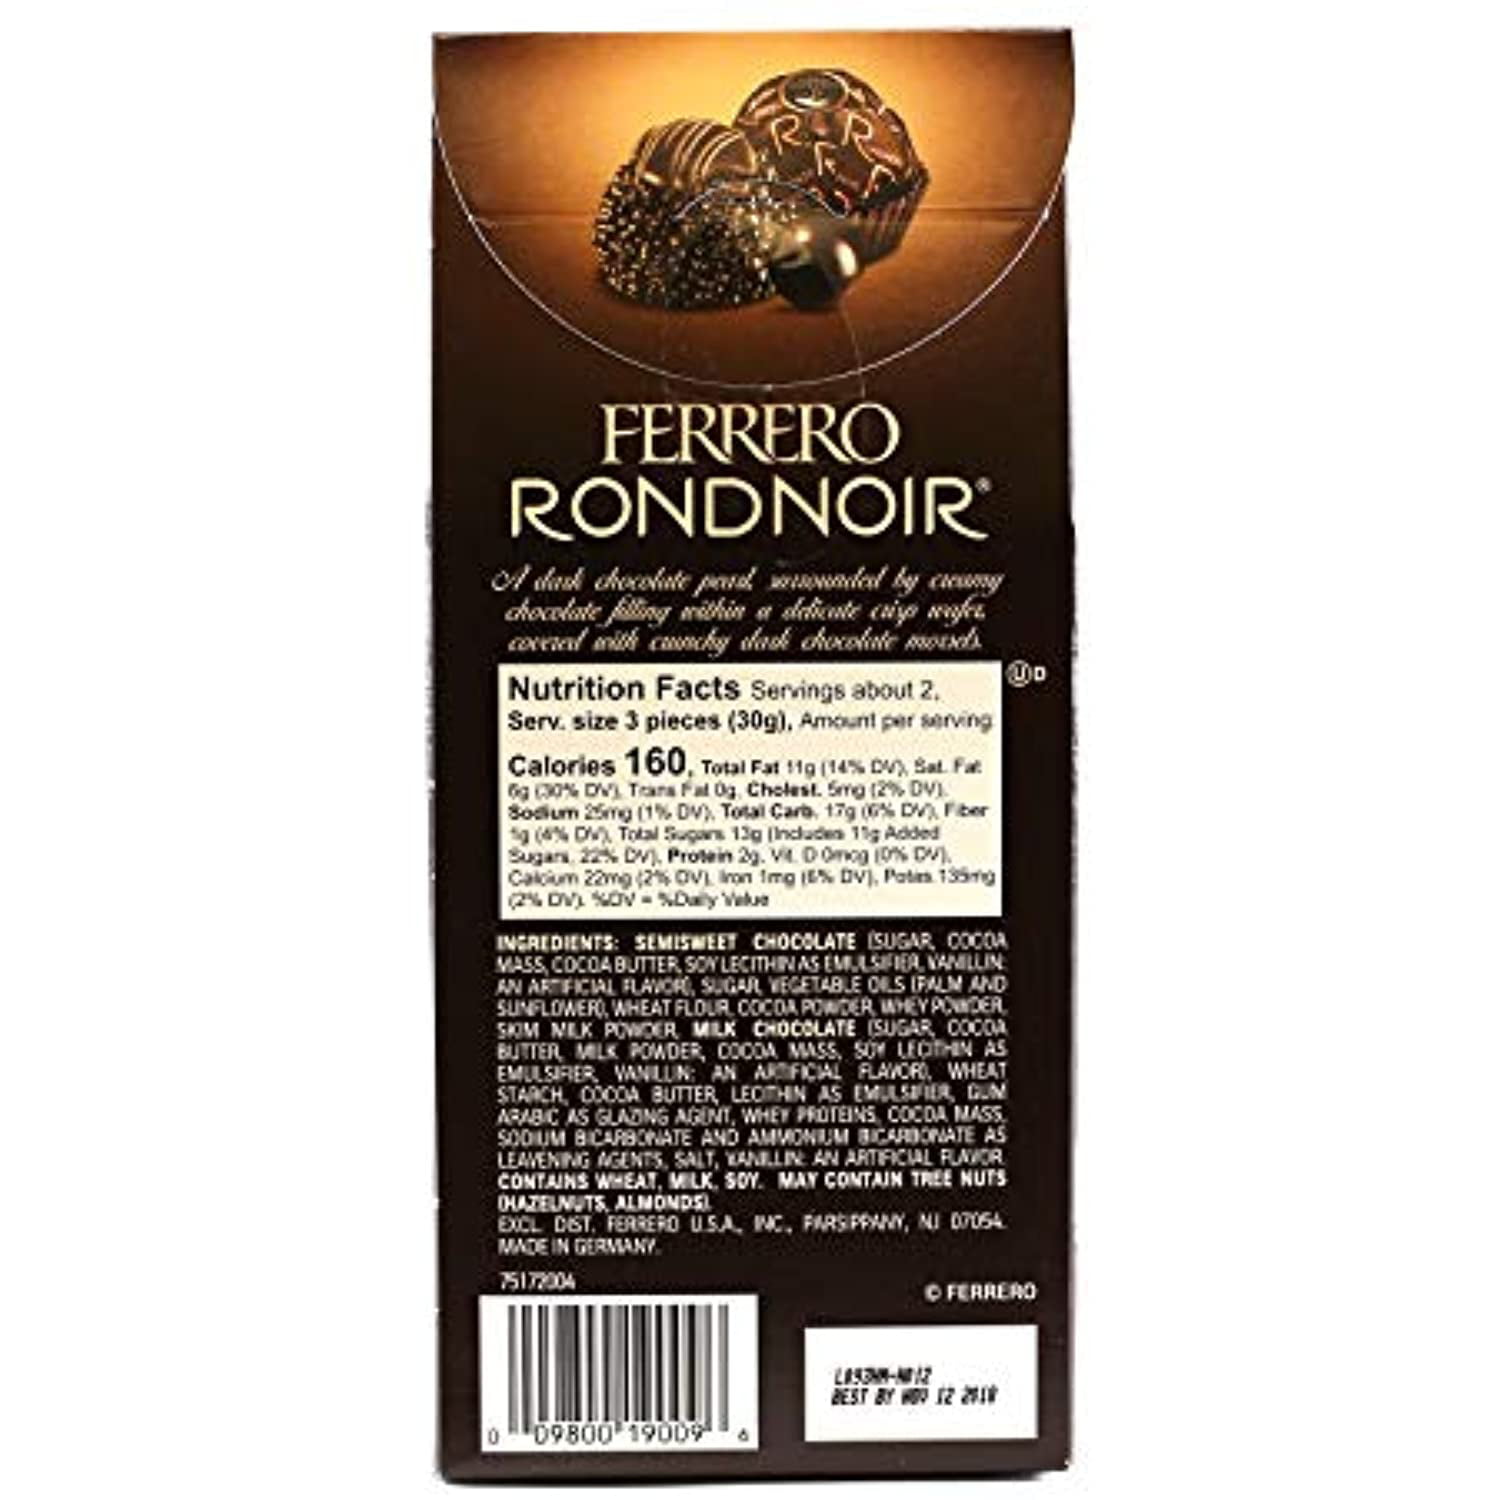 Ferrero rondnoir sachet de chocolat noir fin, 2,7 oz